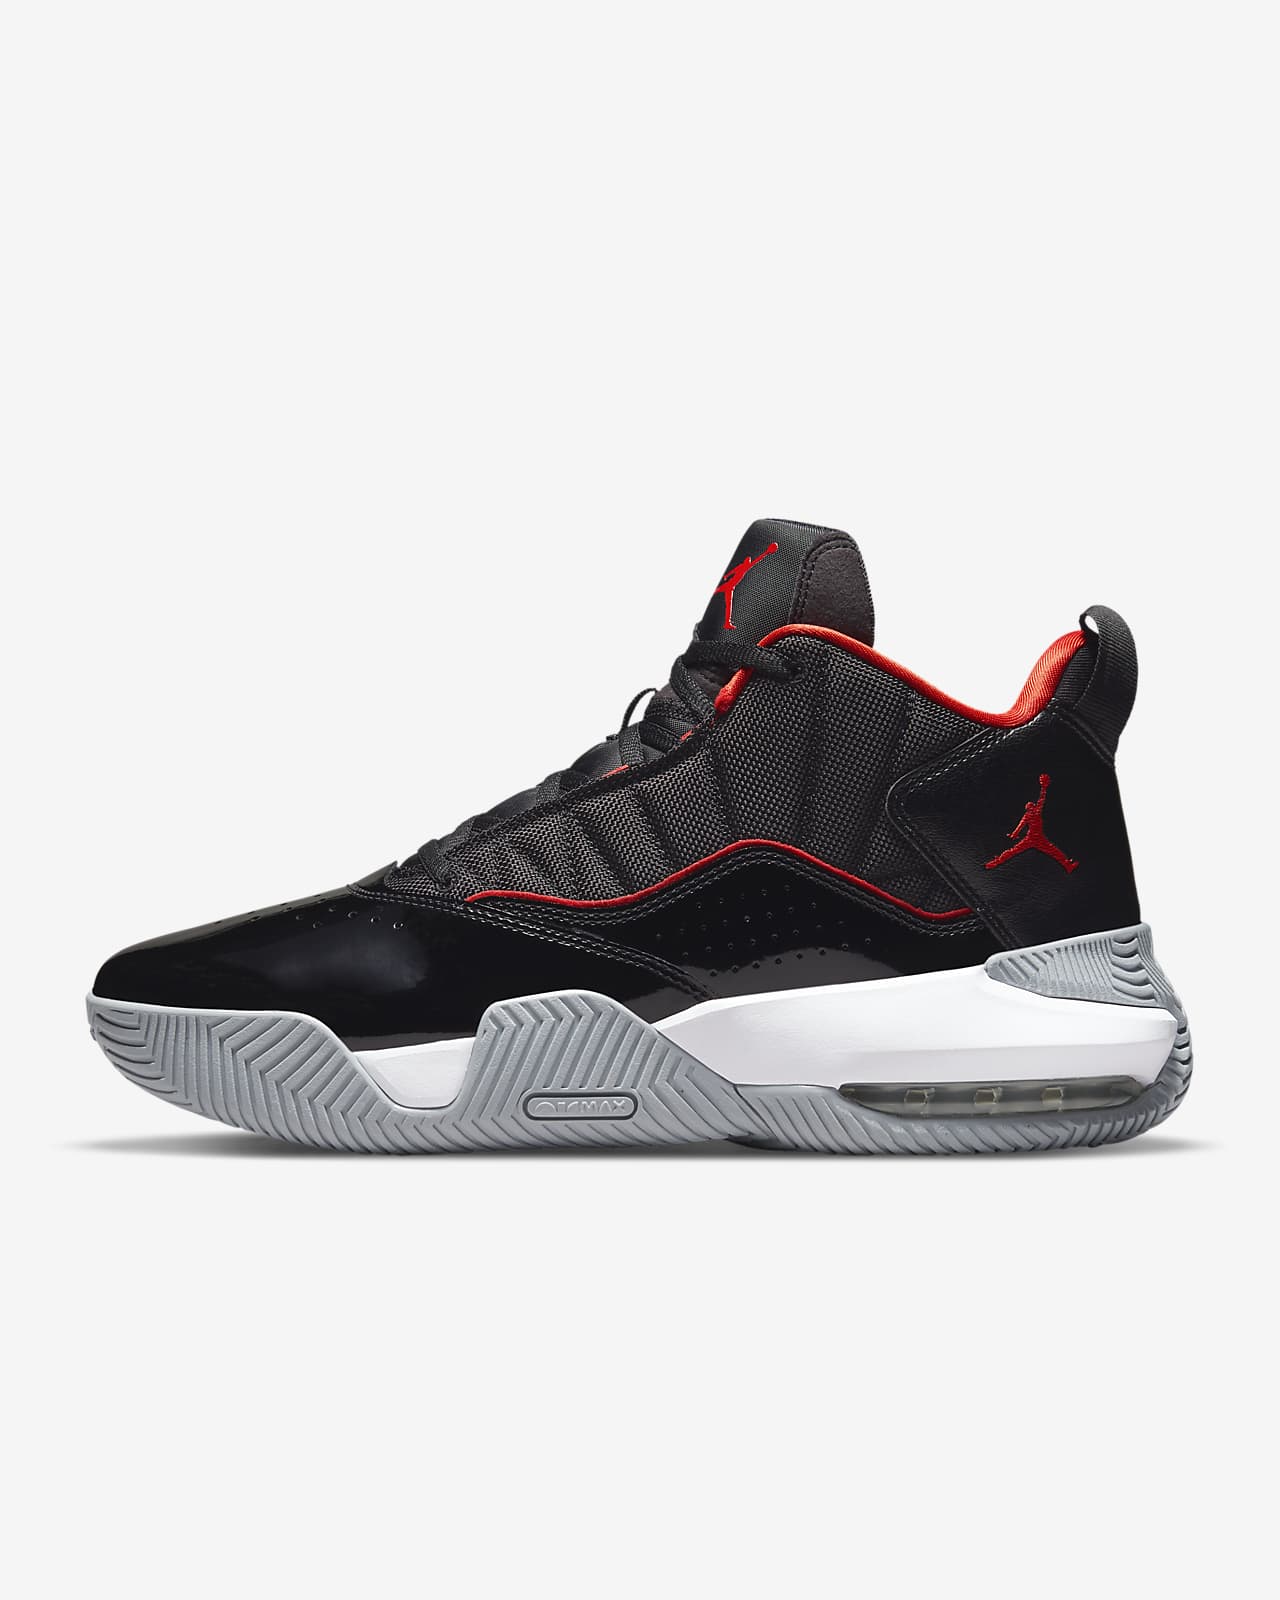 Jordan Stay Loyal 'Black / Chile Red' - Sneaker Steal